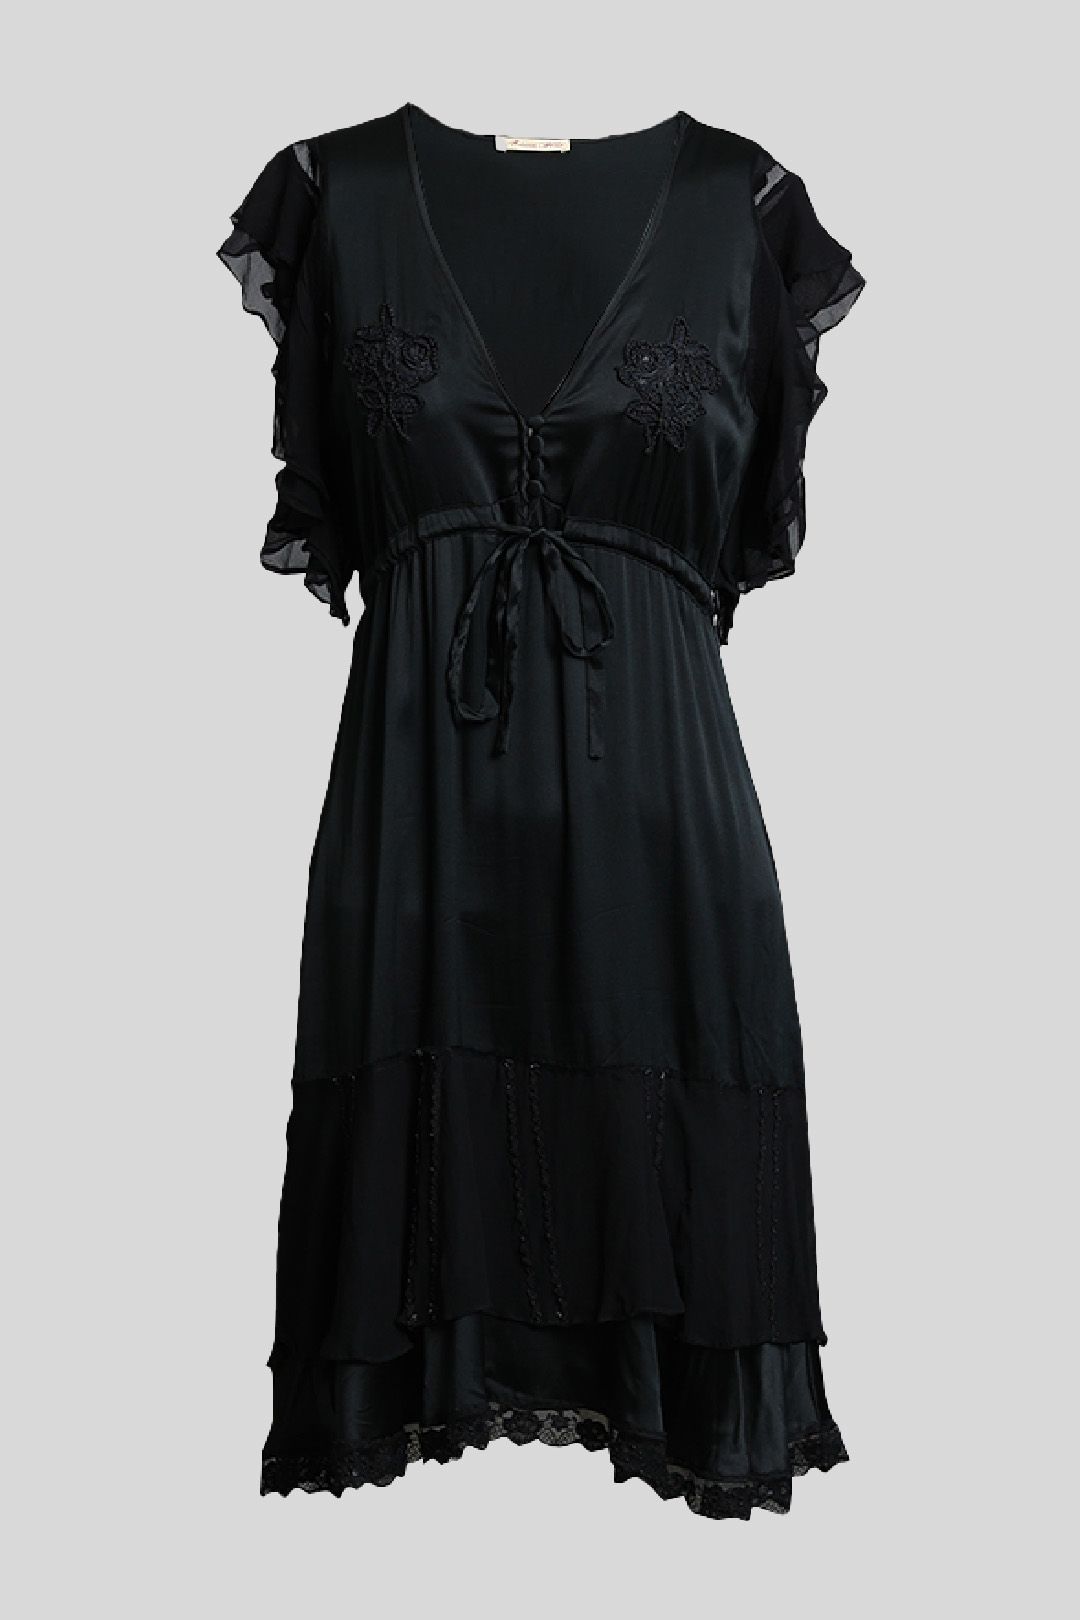 Alannah Hill - Black Silk Embroidered Floral Dress